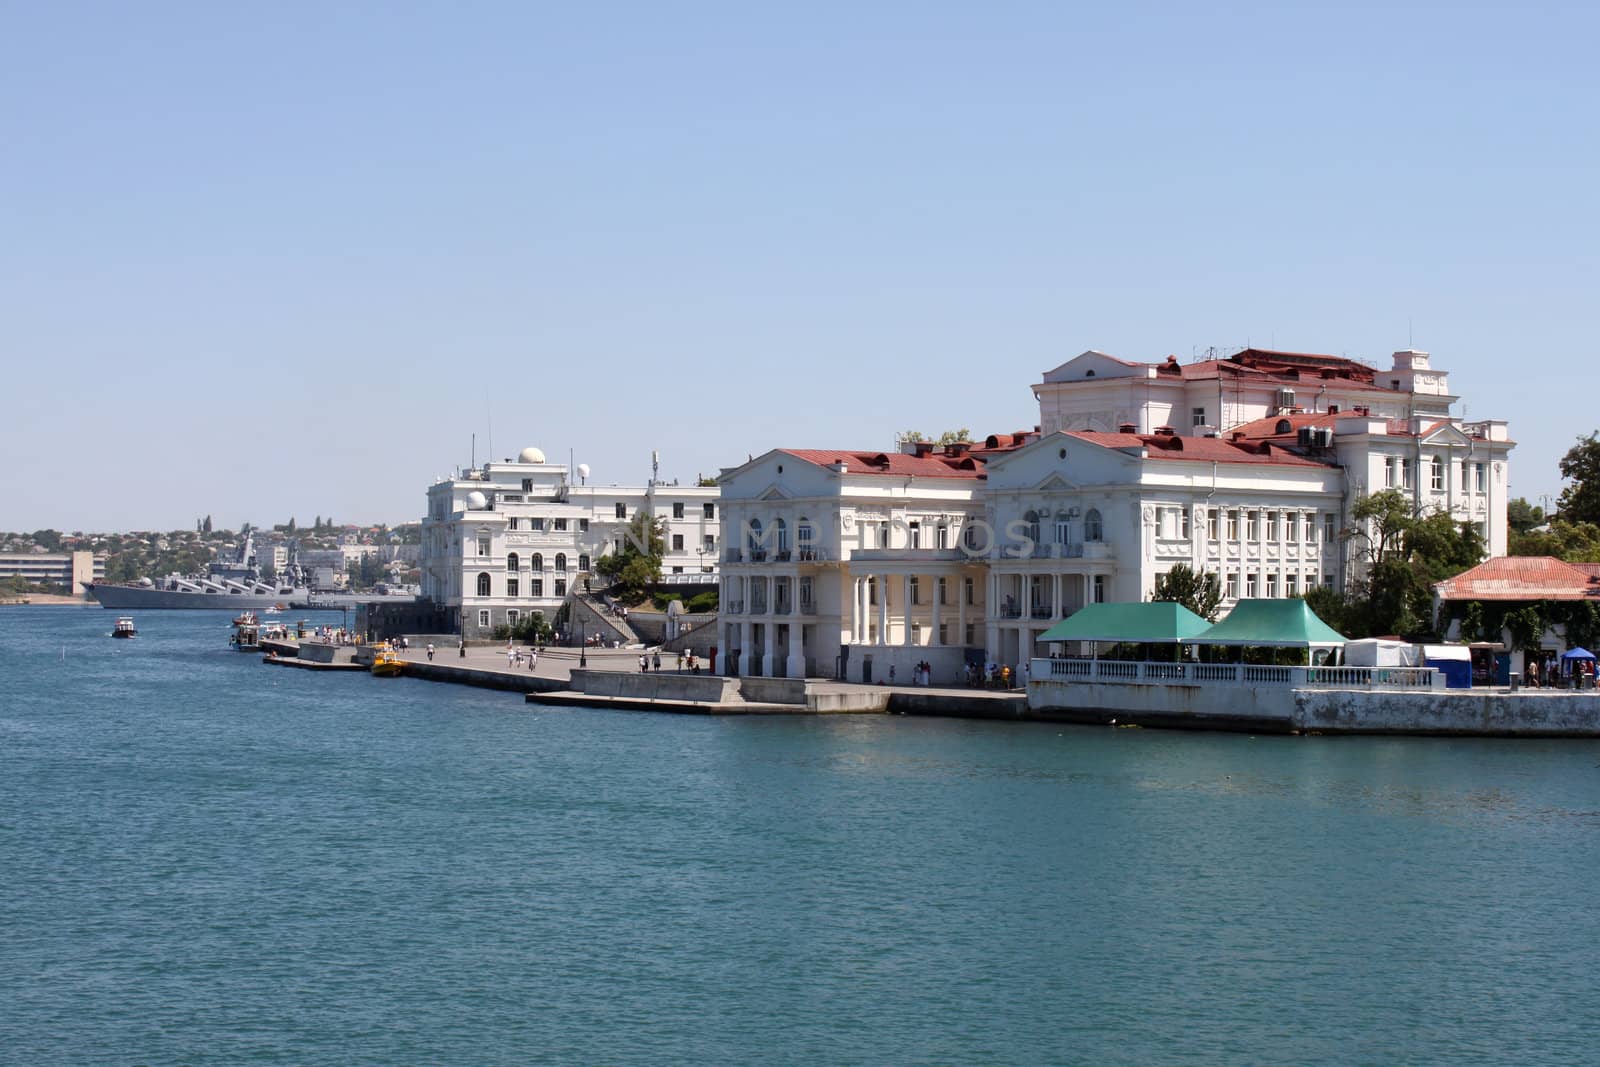 view on quay at bay of Sevastopol at summer